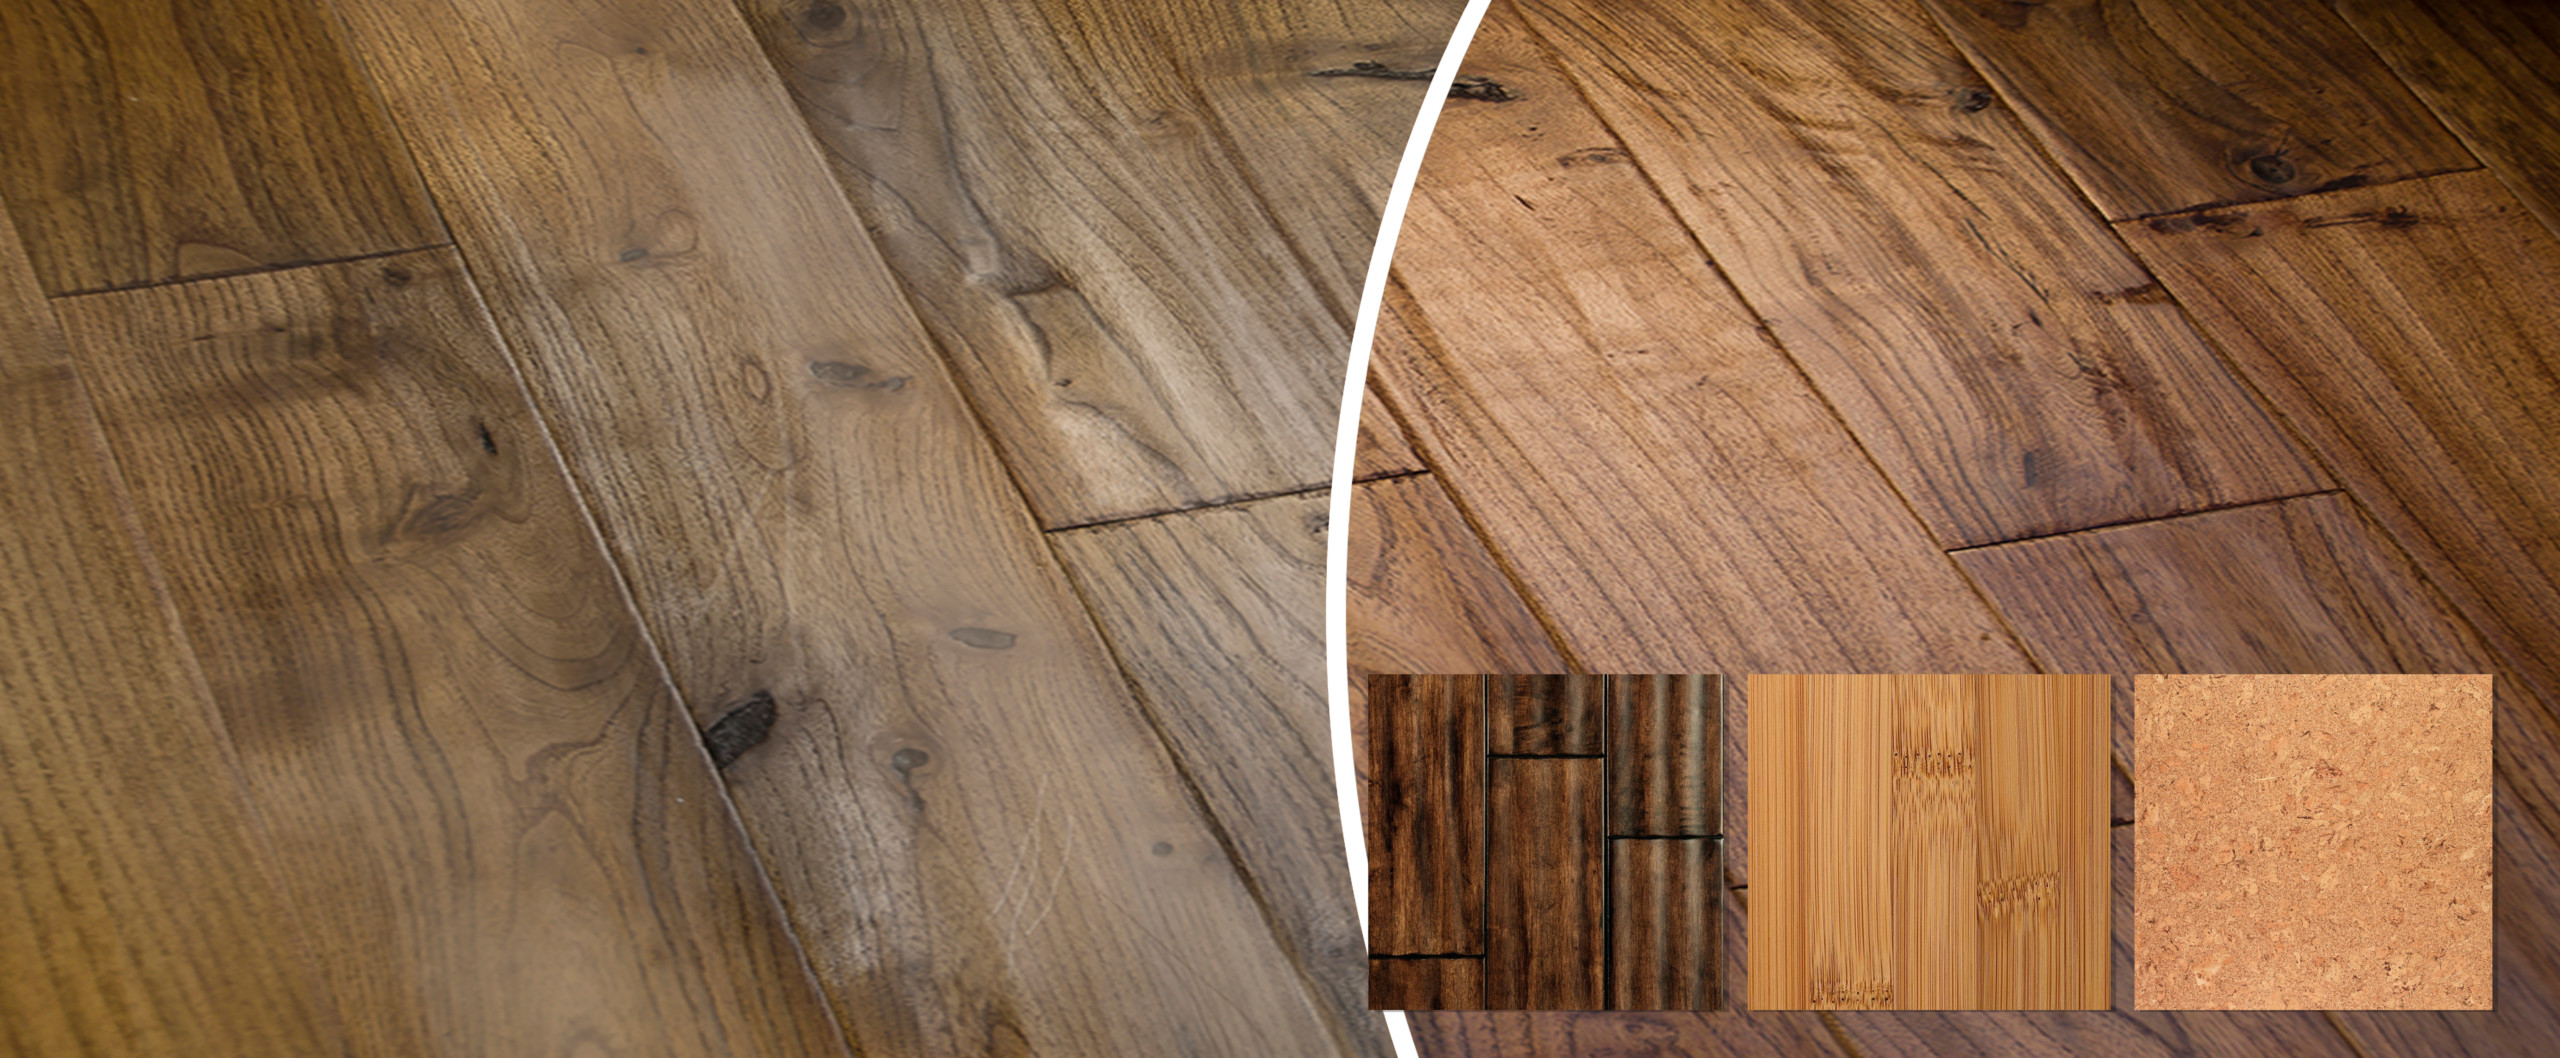 Non Sandable Floor Refinishing N, Tru Line Hardwood Flooring And Dust Free Resurfacing